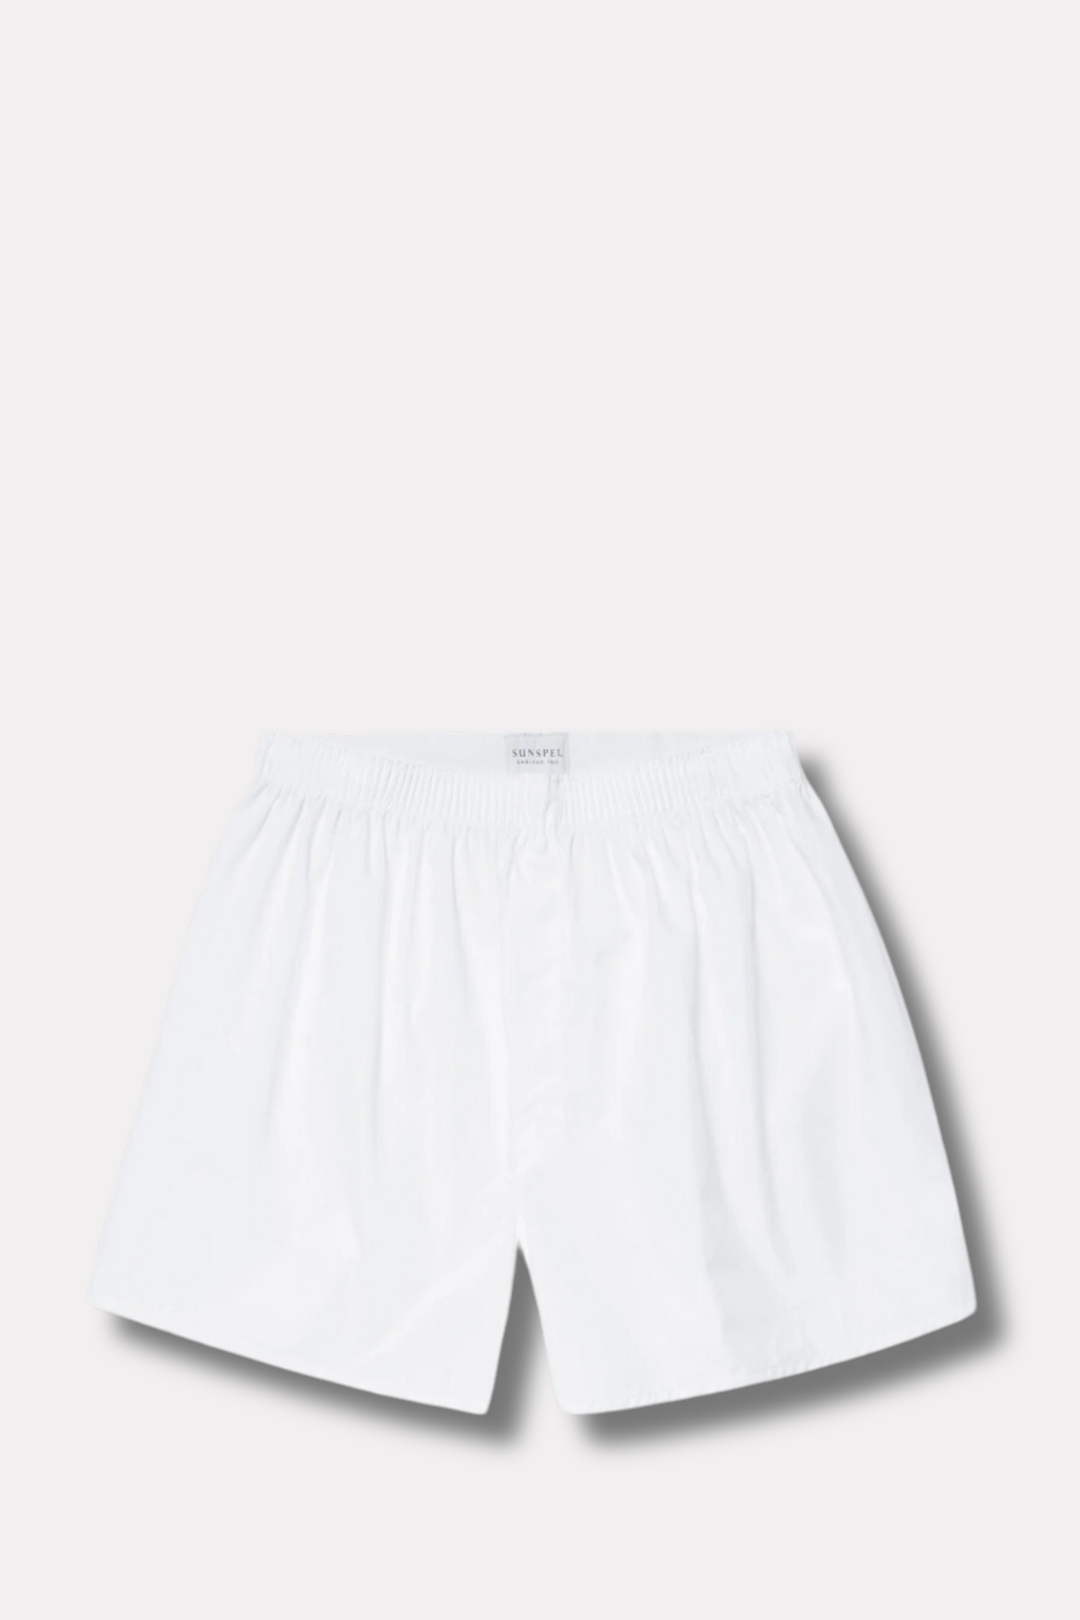 Classic Woven Cotton Boxer Shorts White